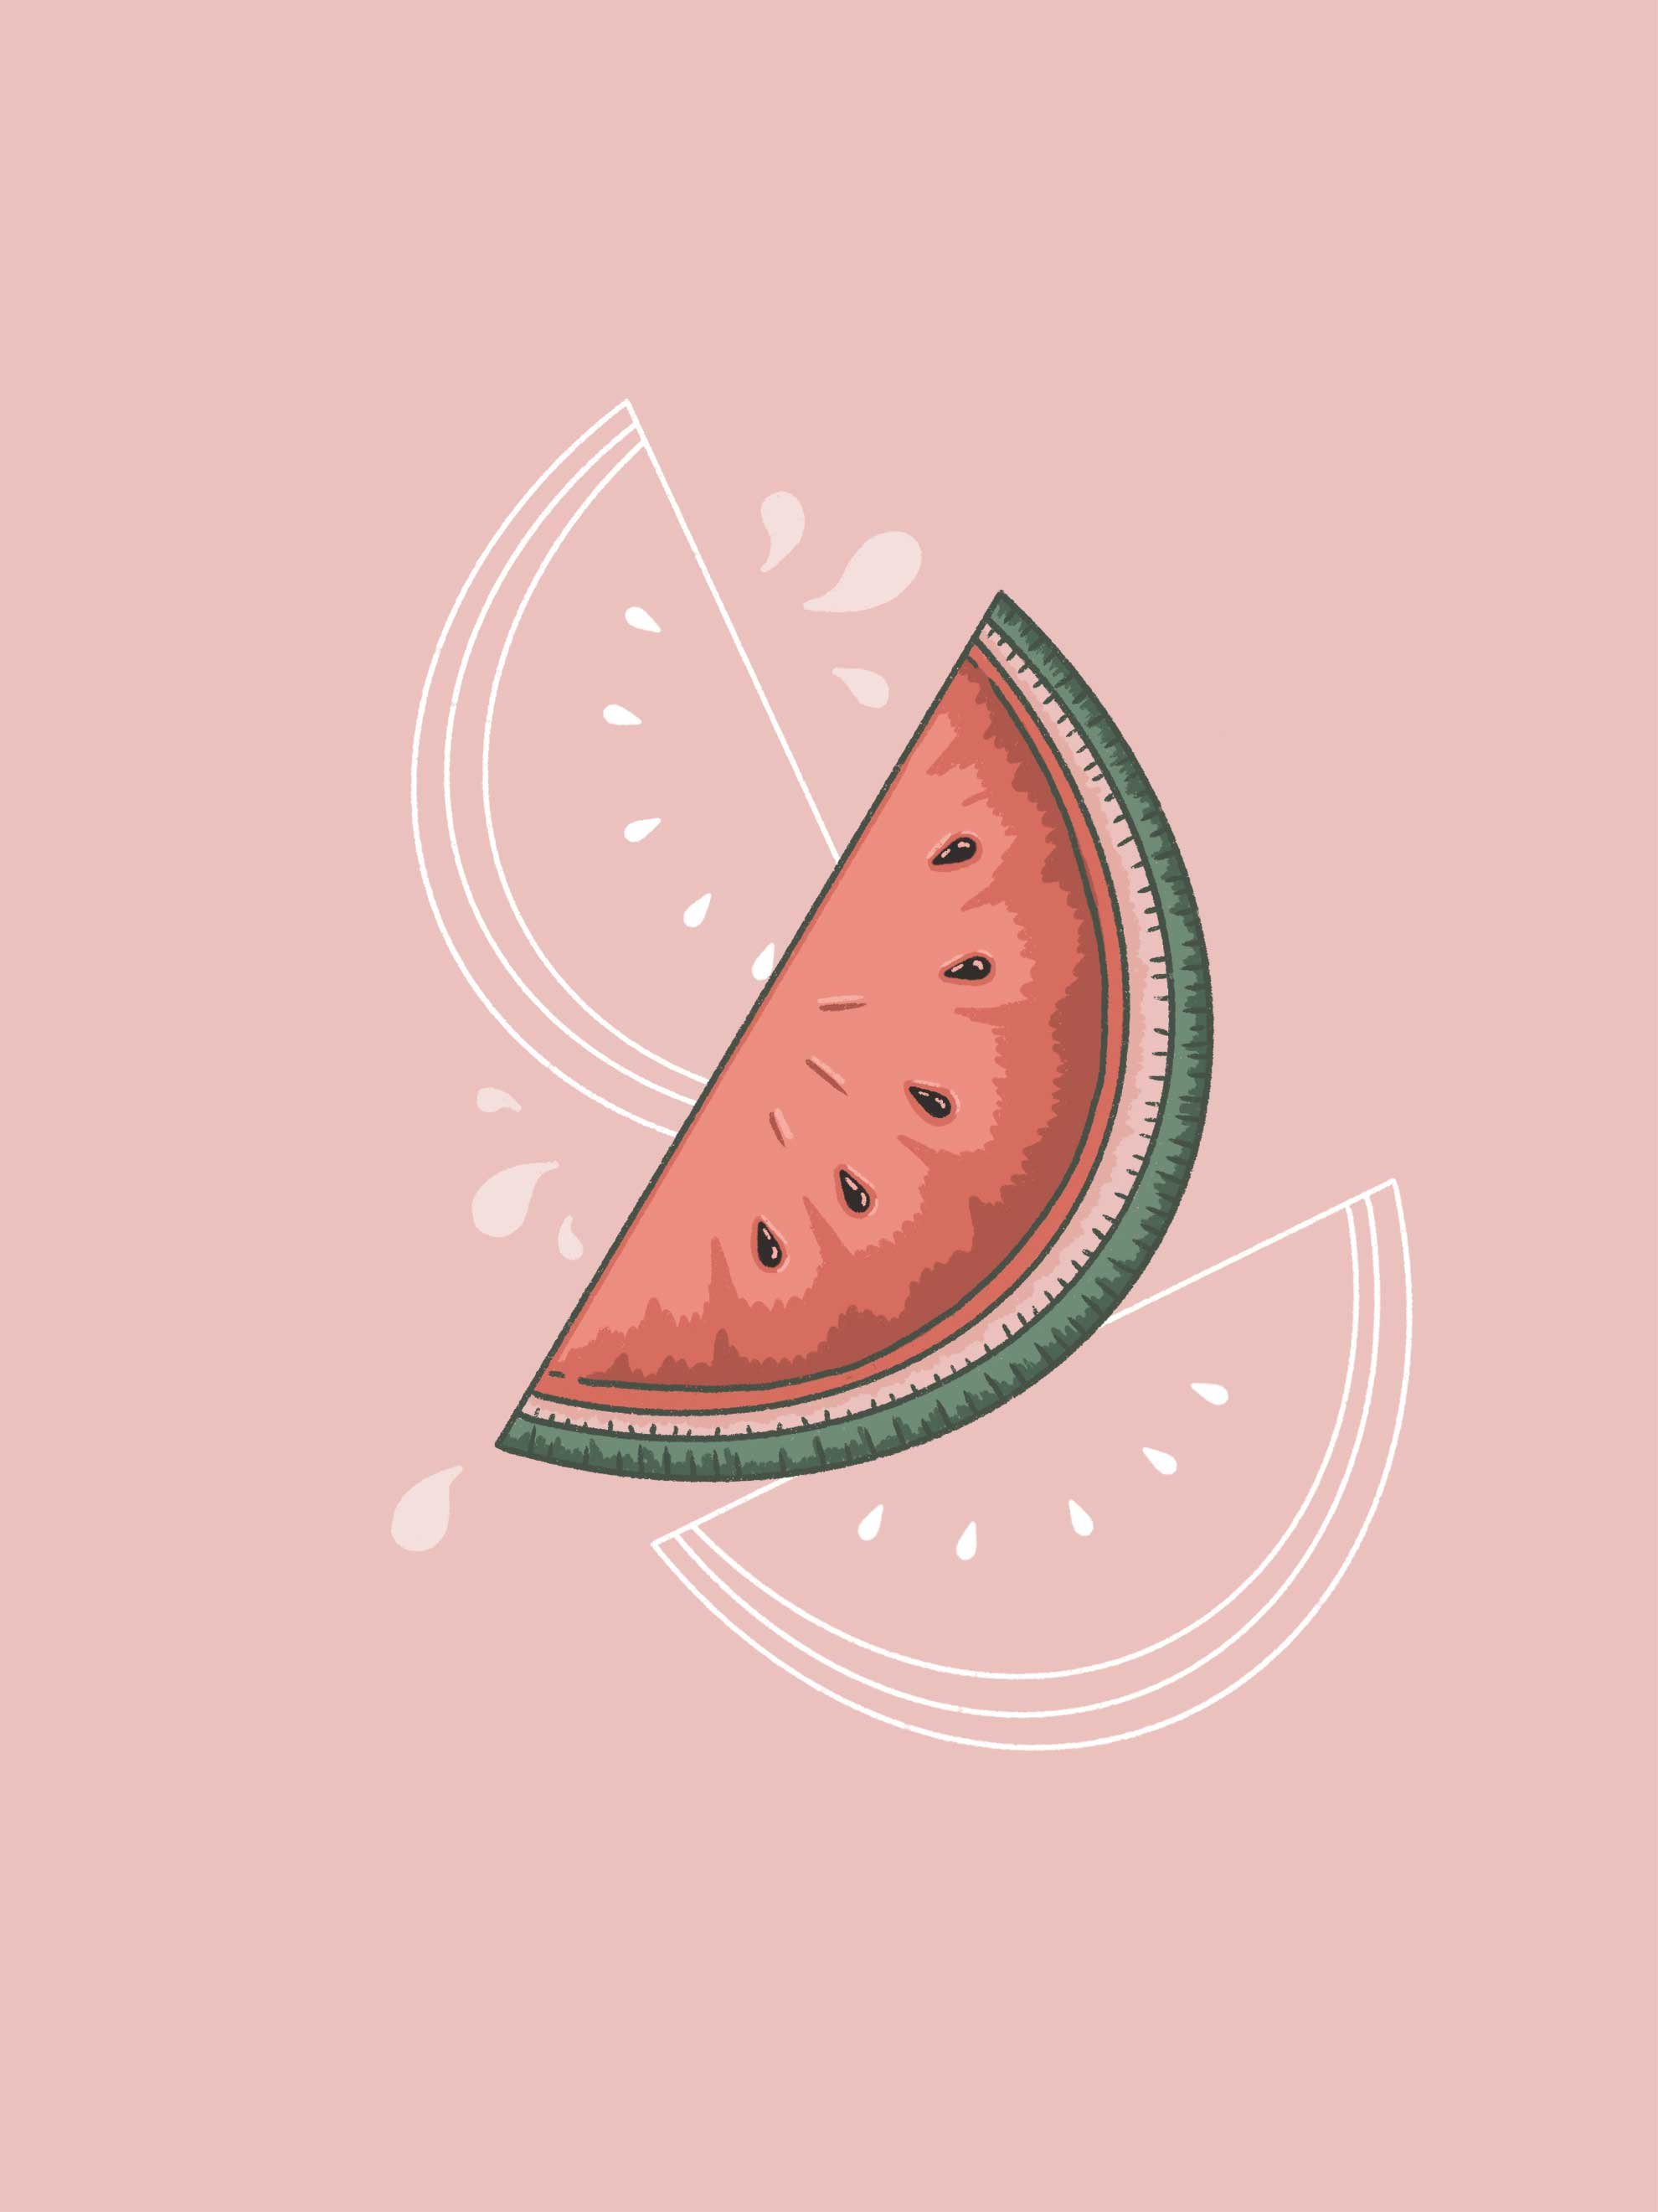 Watermelon_Art-Licensing-KallieGoetz-PipAnd-Crickdet-LowRes.jpg